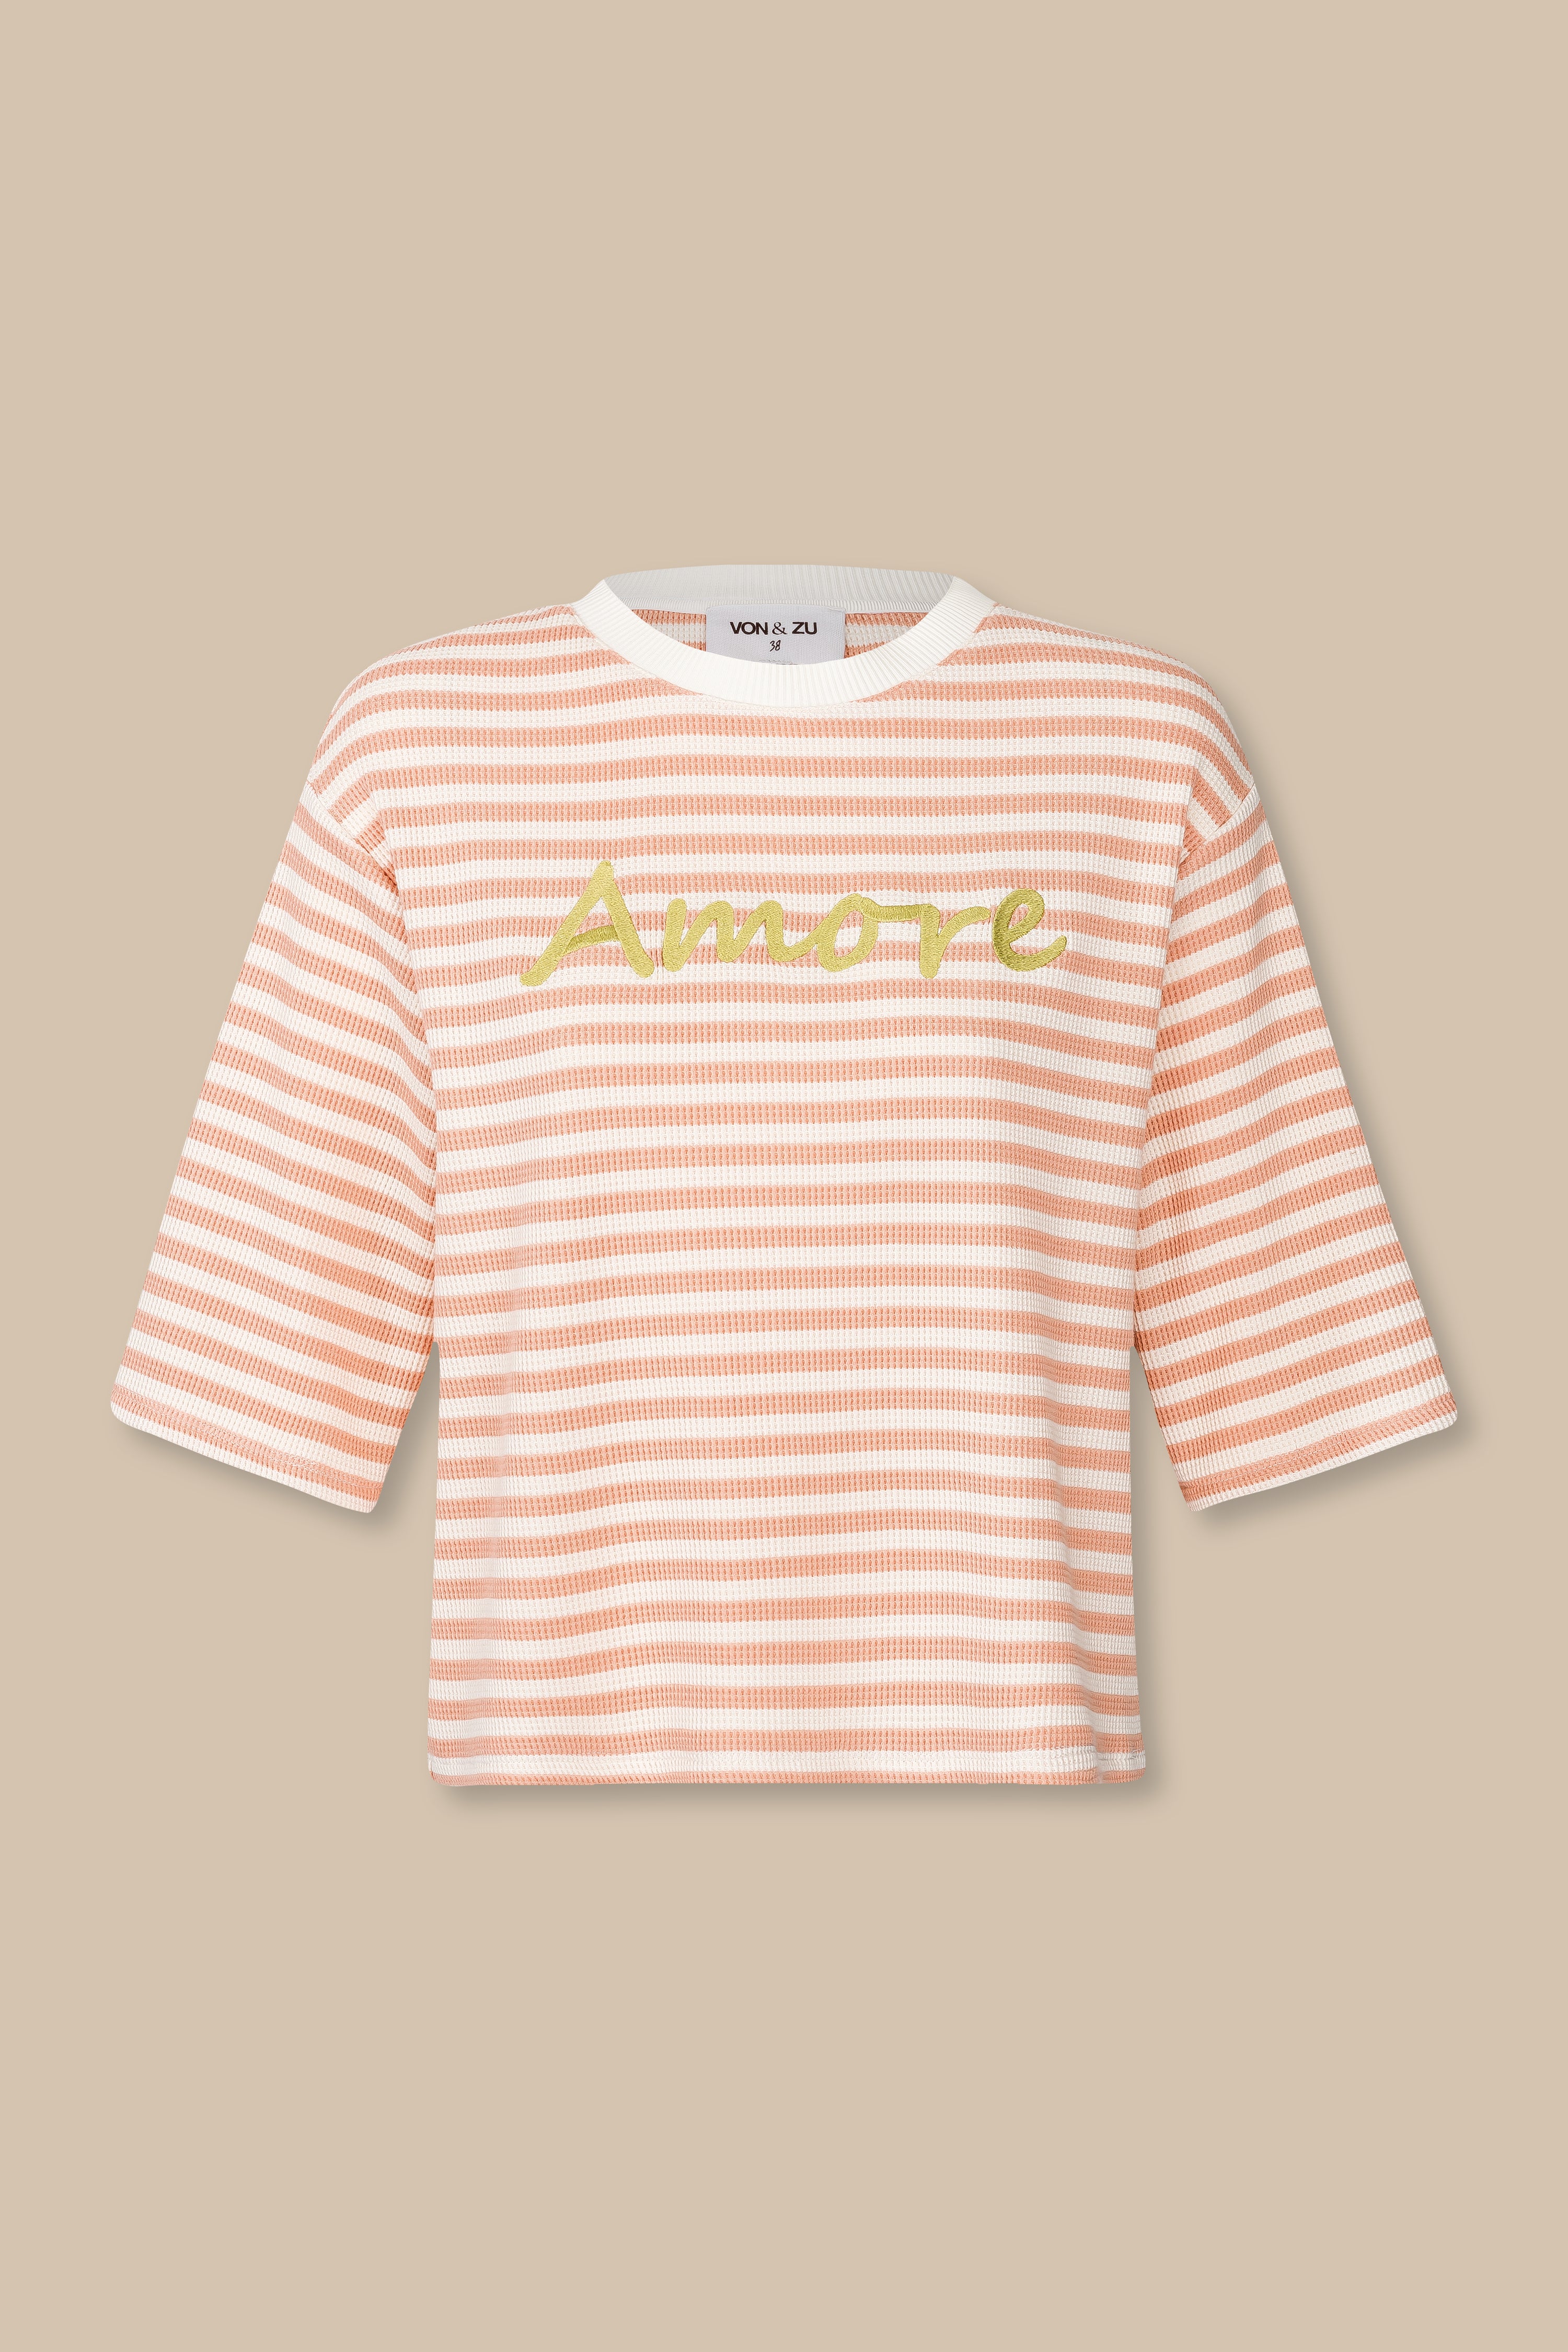 Embroidered striped sweatshirt